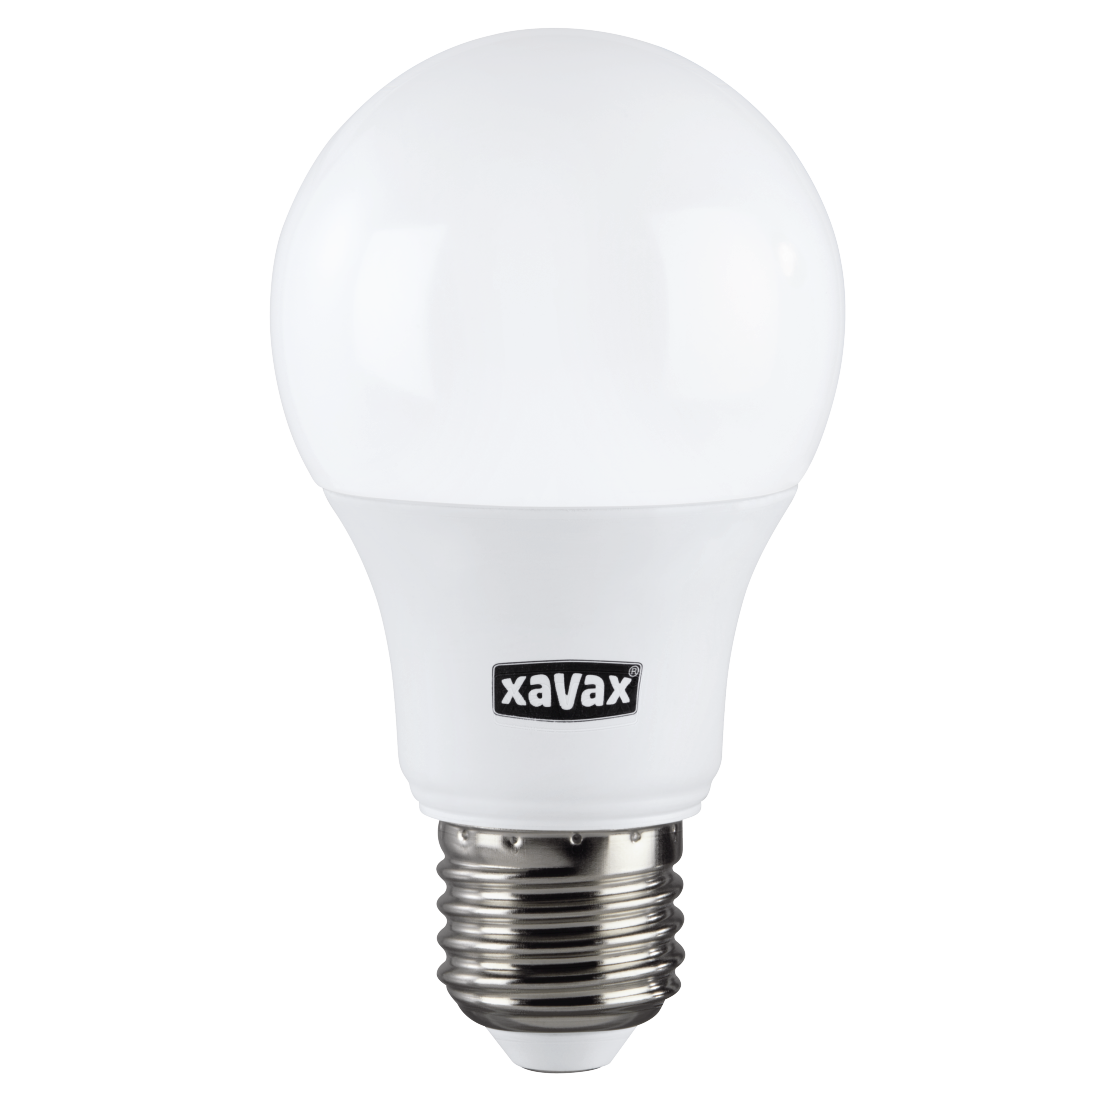 abx High-Res Image - Xavax, Ampoule LED, E27, 470 lm rempl. amp. à incandes. 40W, blanc chd, RA90